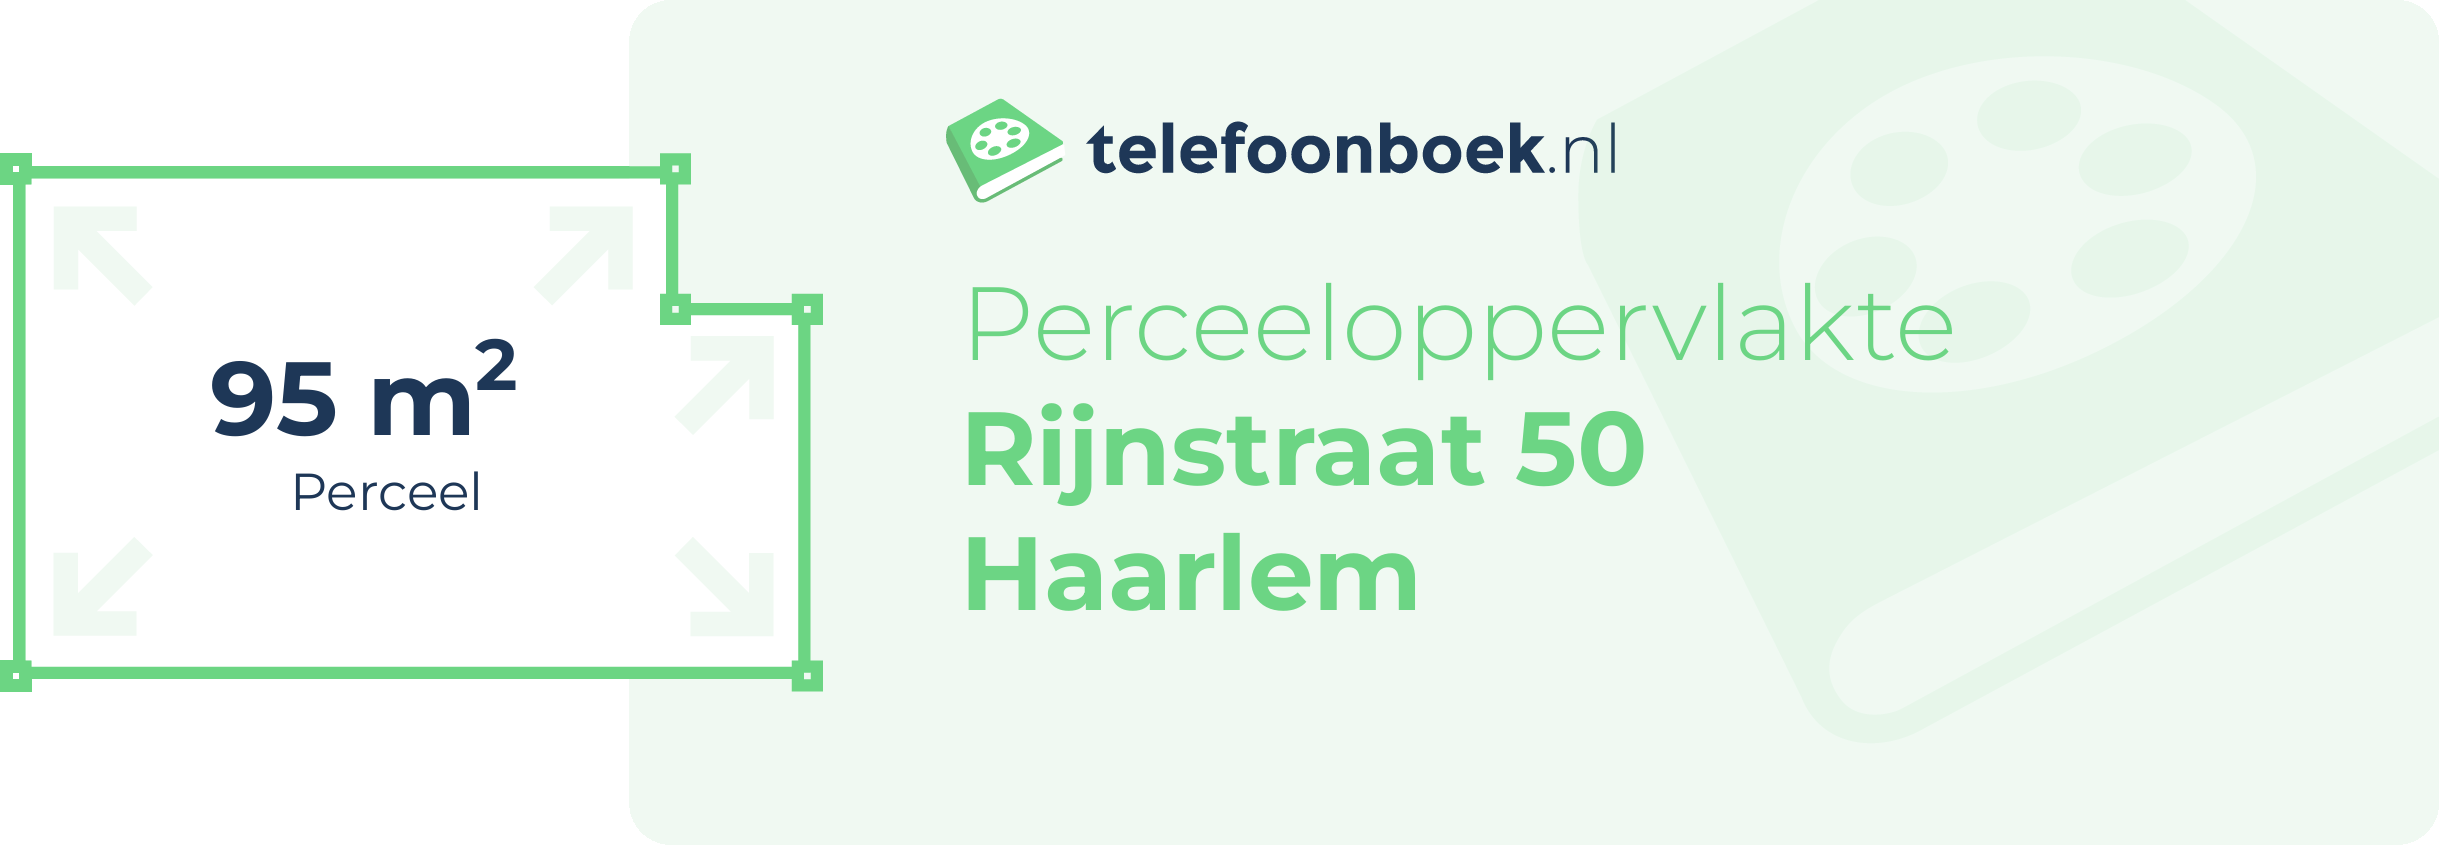 Perceeloppervlakte Rijnstraat 50 Haarlem